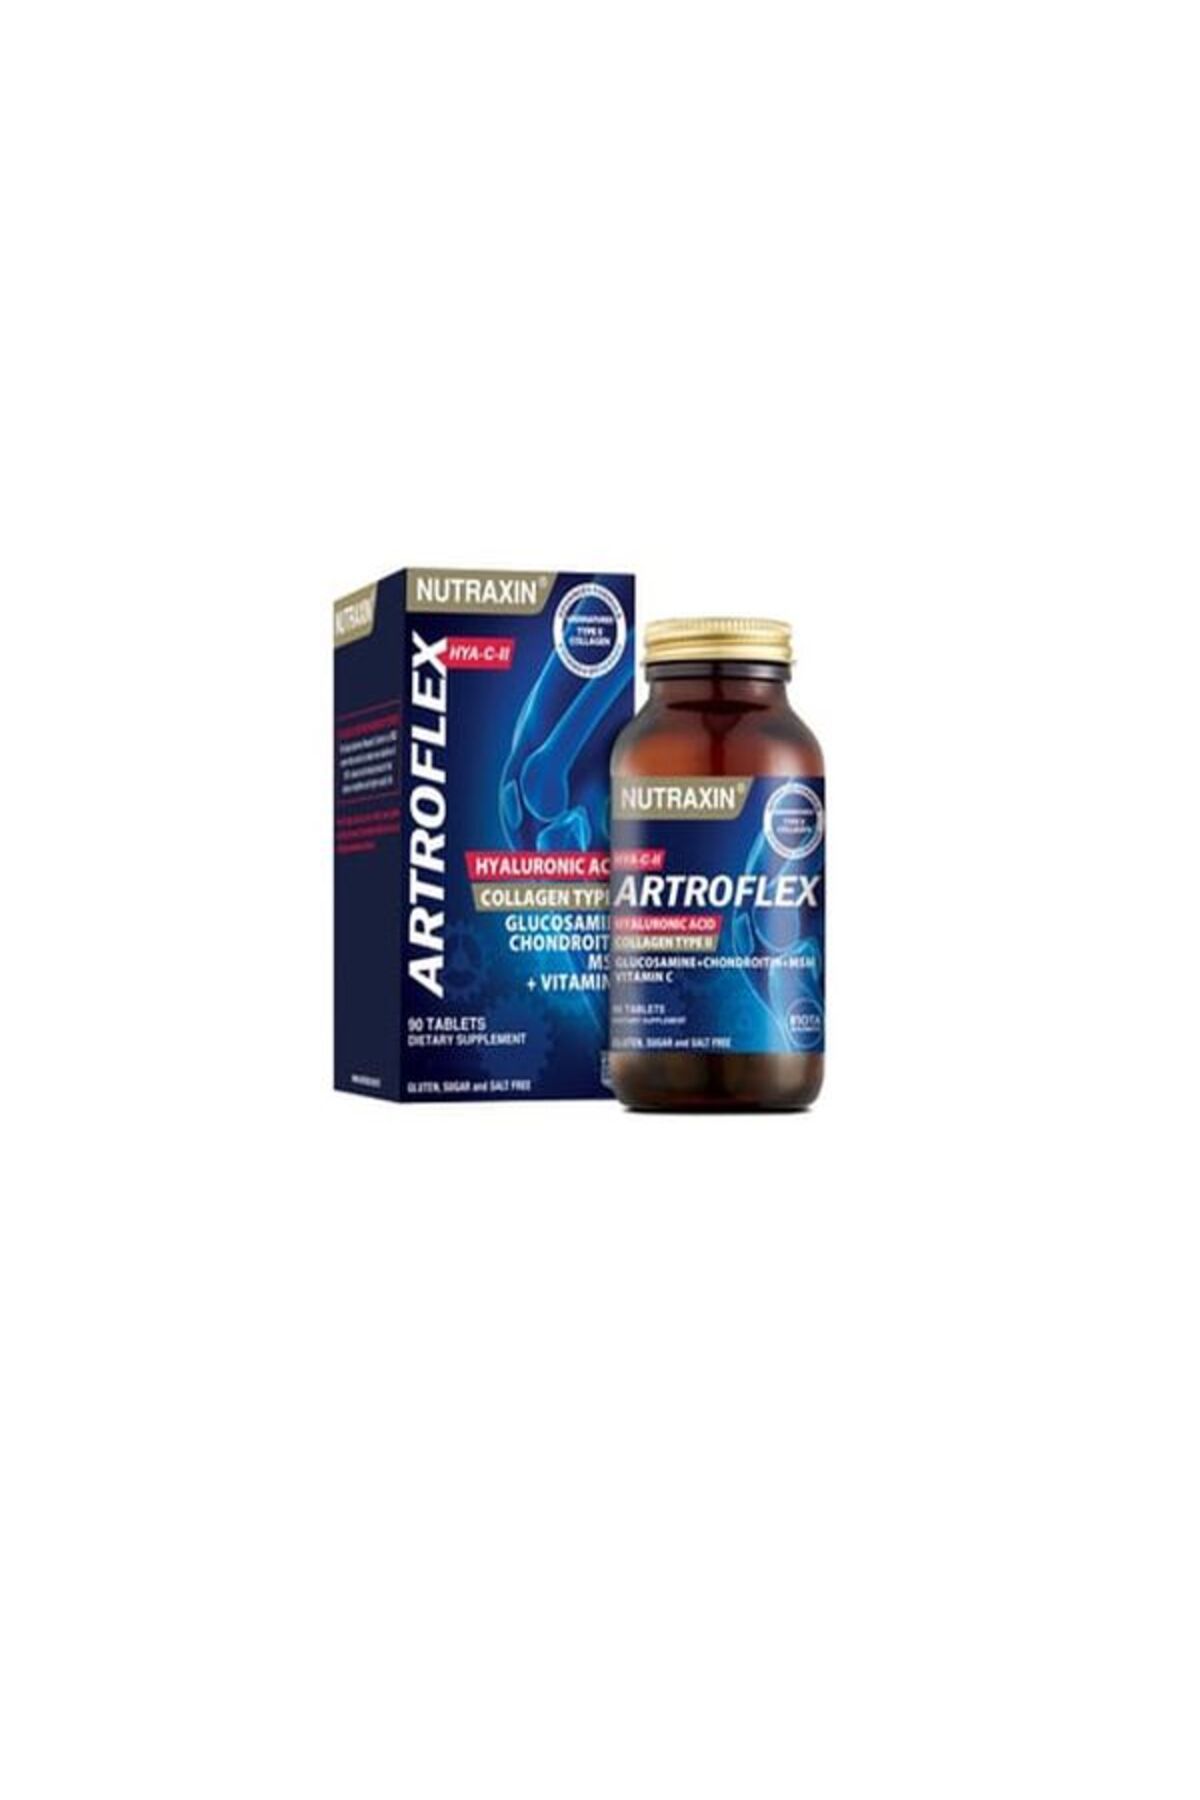 Nutraxin Artroflex Hya C-II 90 Tablet - Glukozamin Kondroitin MSM Tip 2 Kolajen Hyalüronik Asit Vitamin C